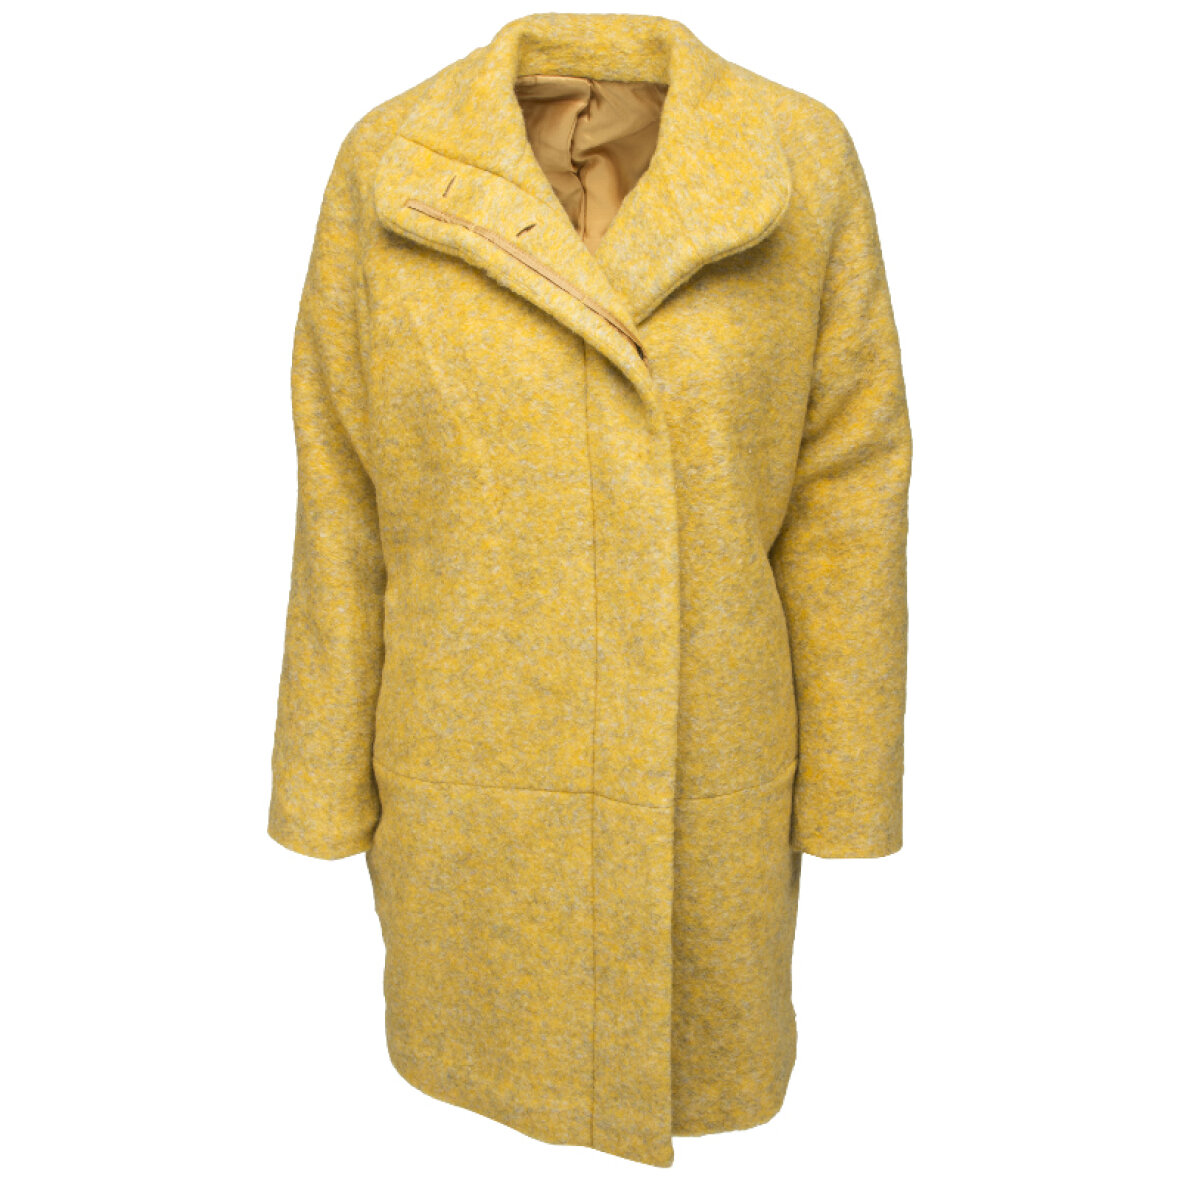 katalog Email rig Samsøe & Samsøe Samsøe uld jakke hoff 7210 gul - Shop online nu